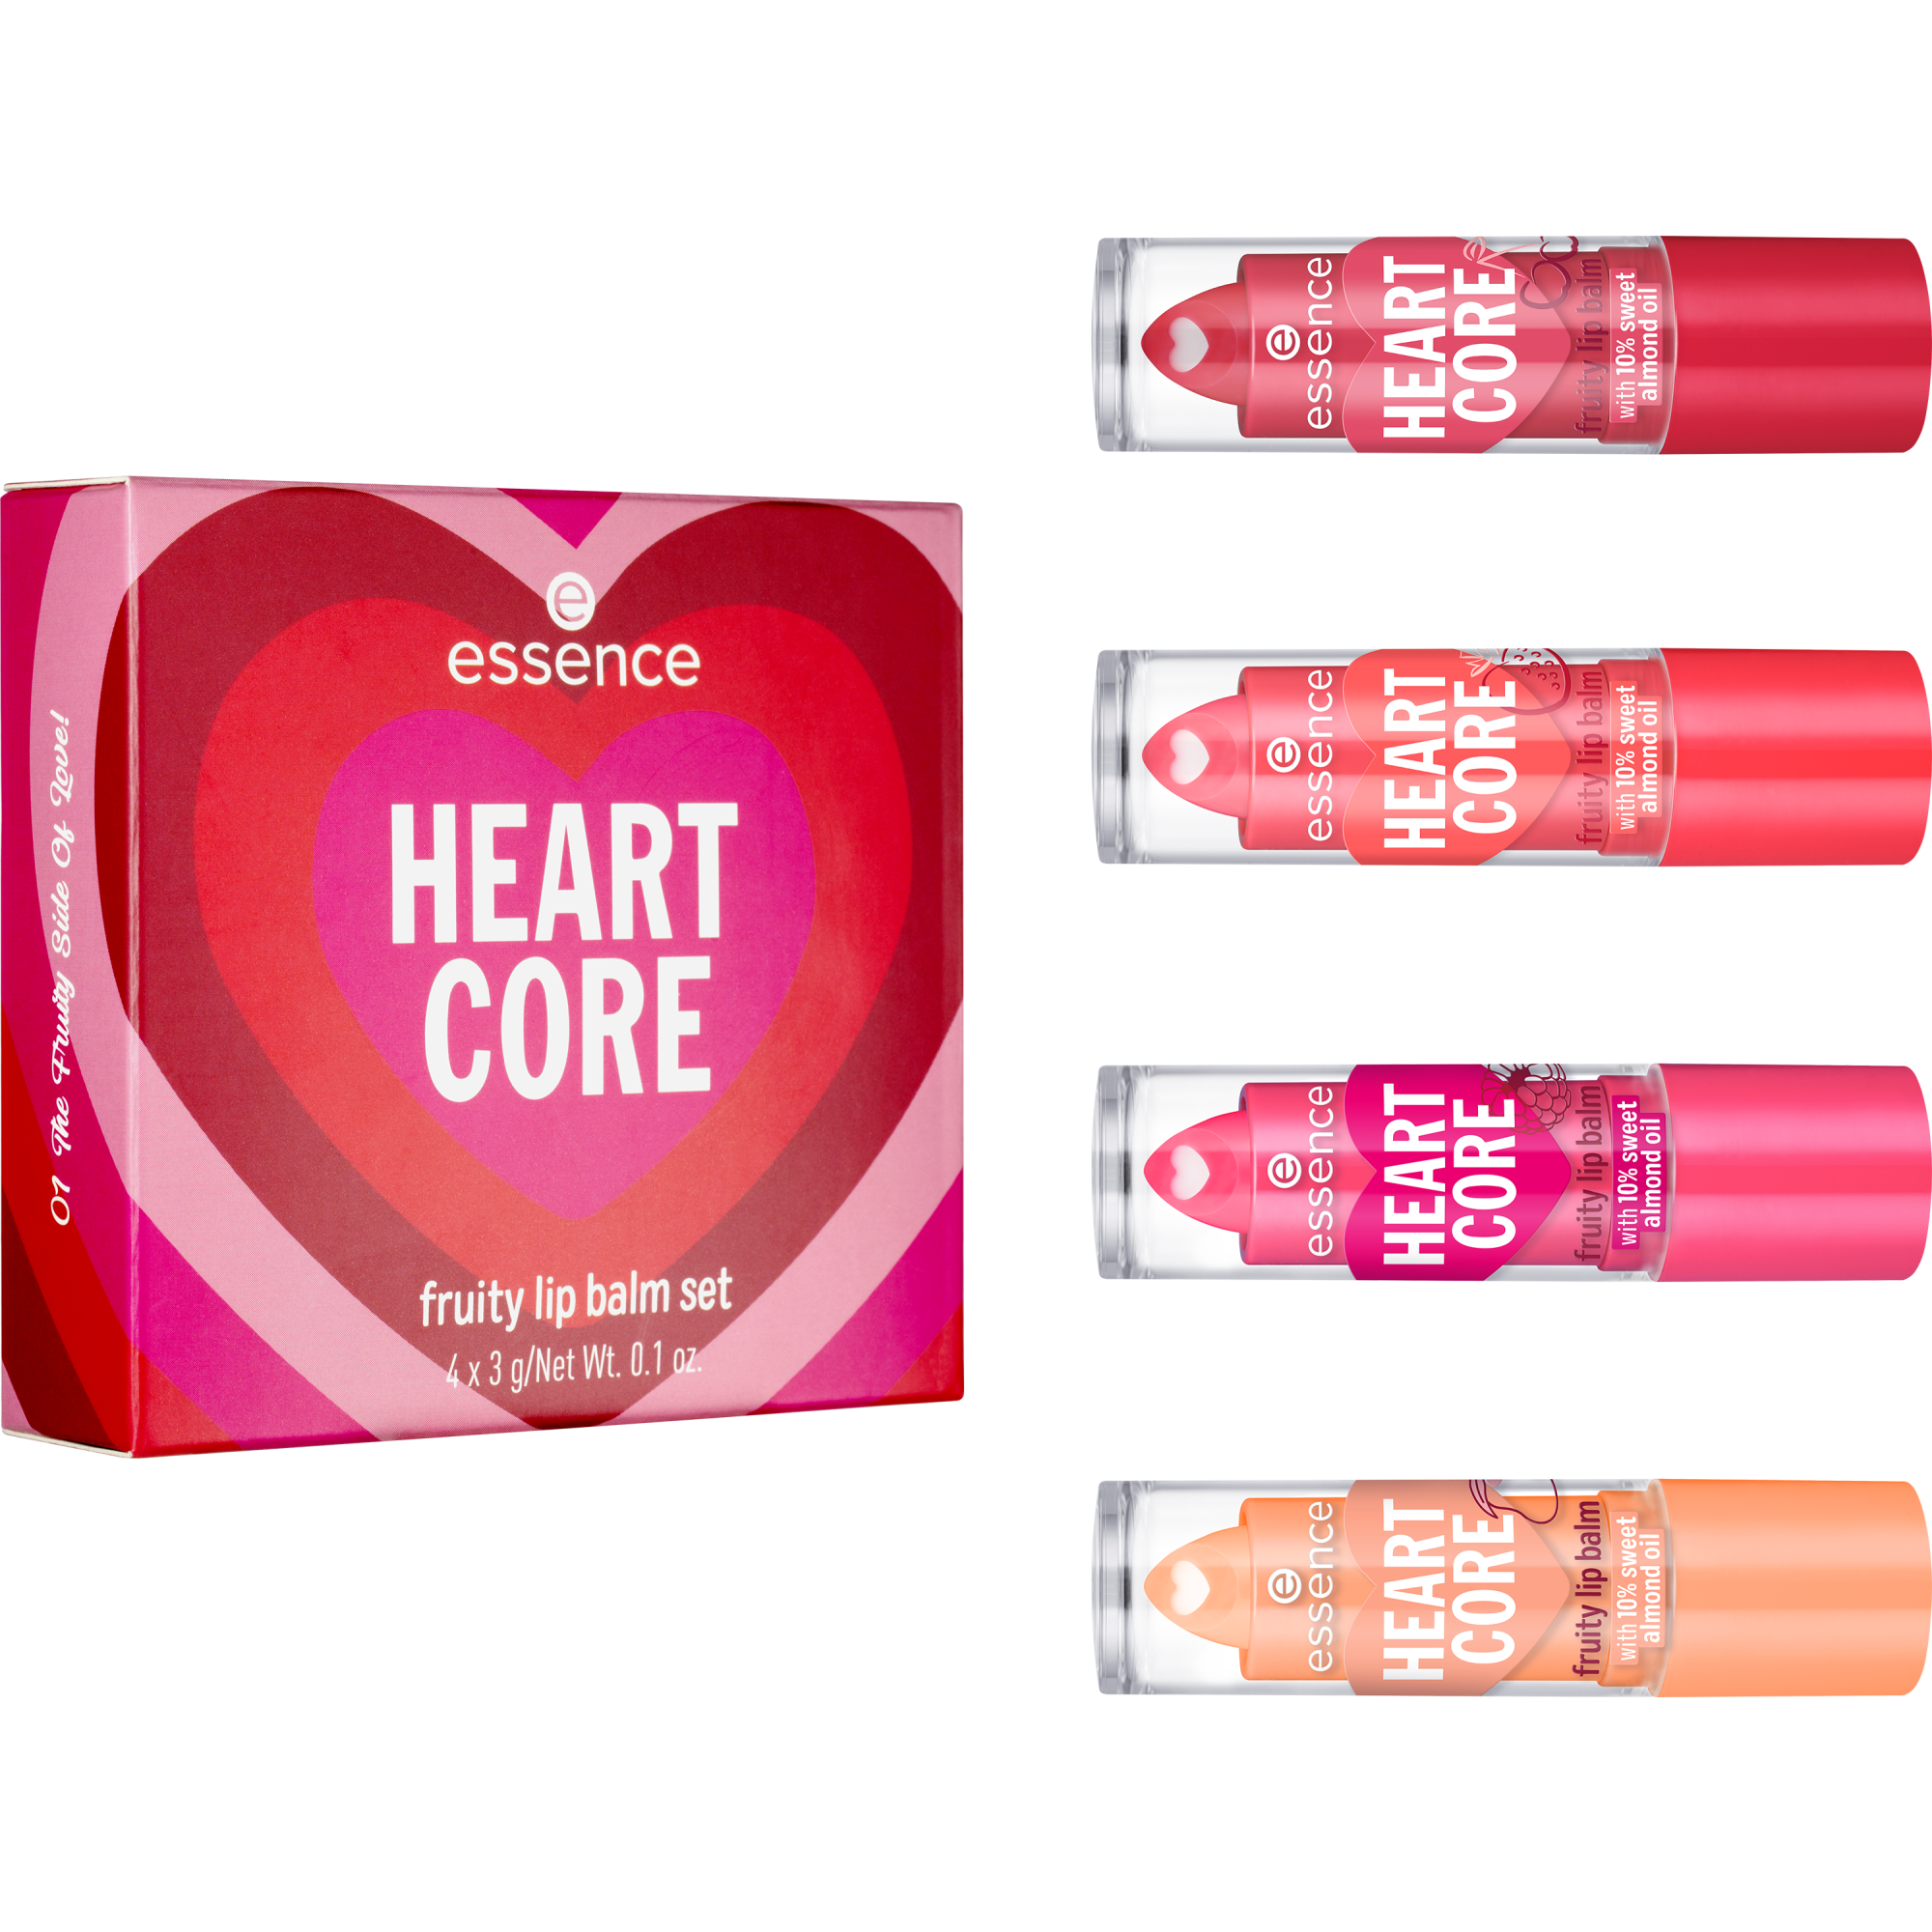 HEART CORE fruity lip balm set